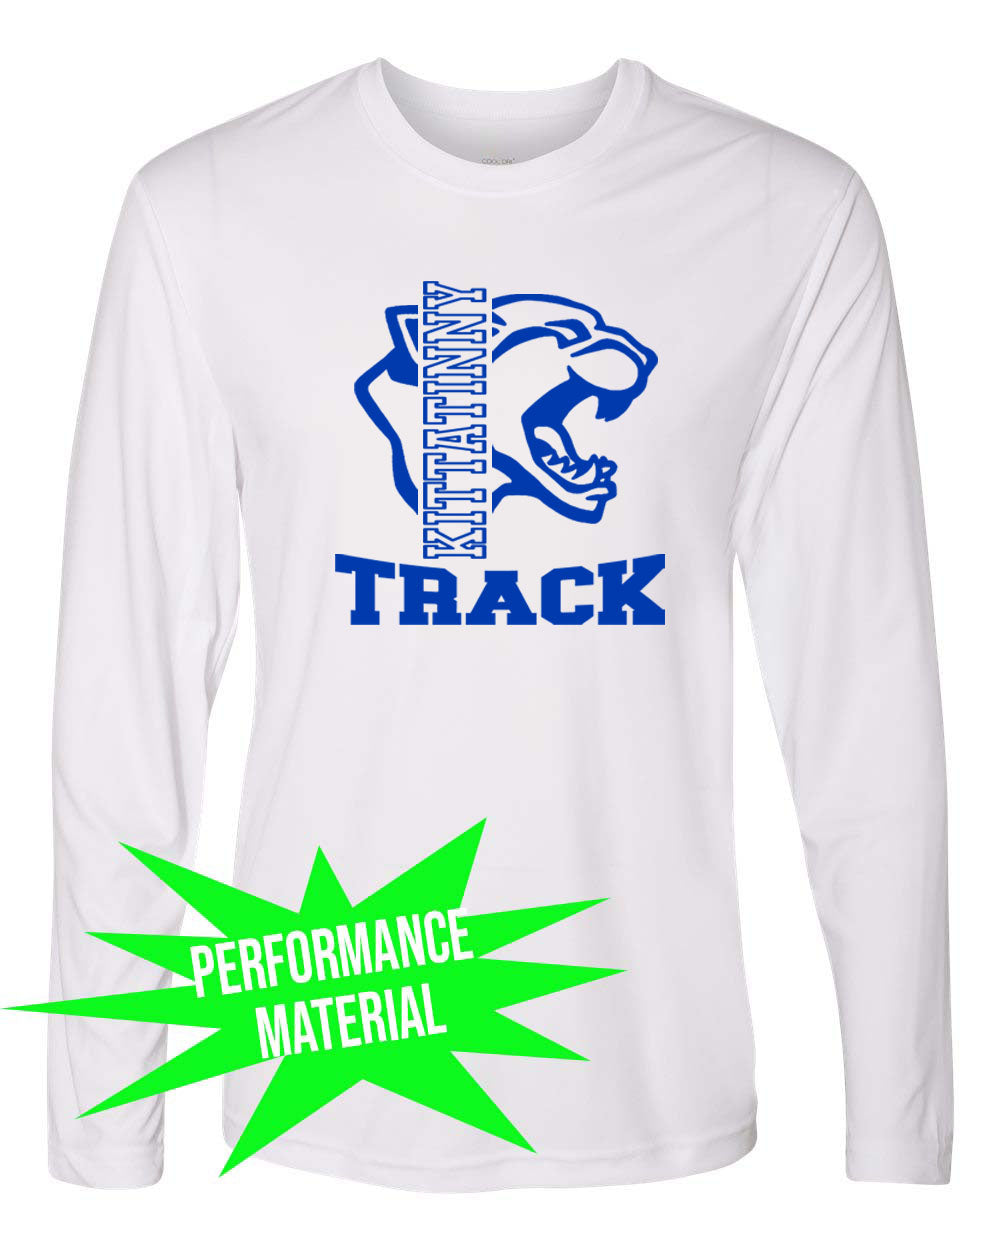 Kittatinny Track Performance Material Design 8 Long Sleeve Shirt